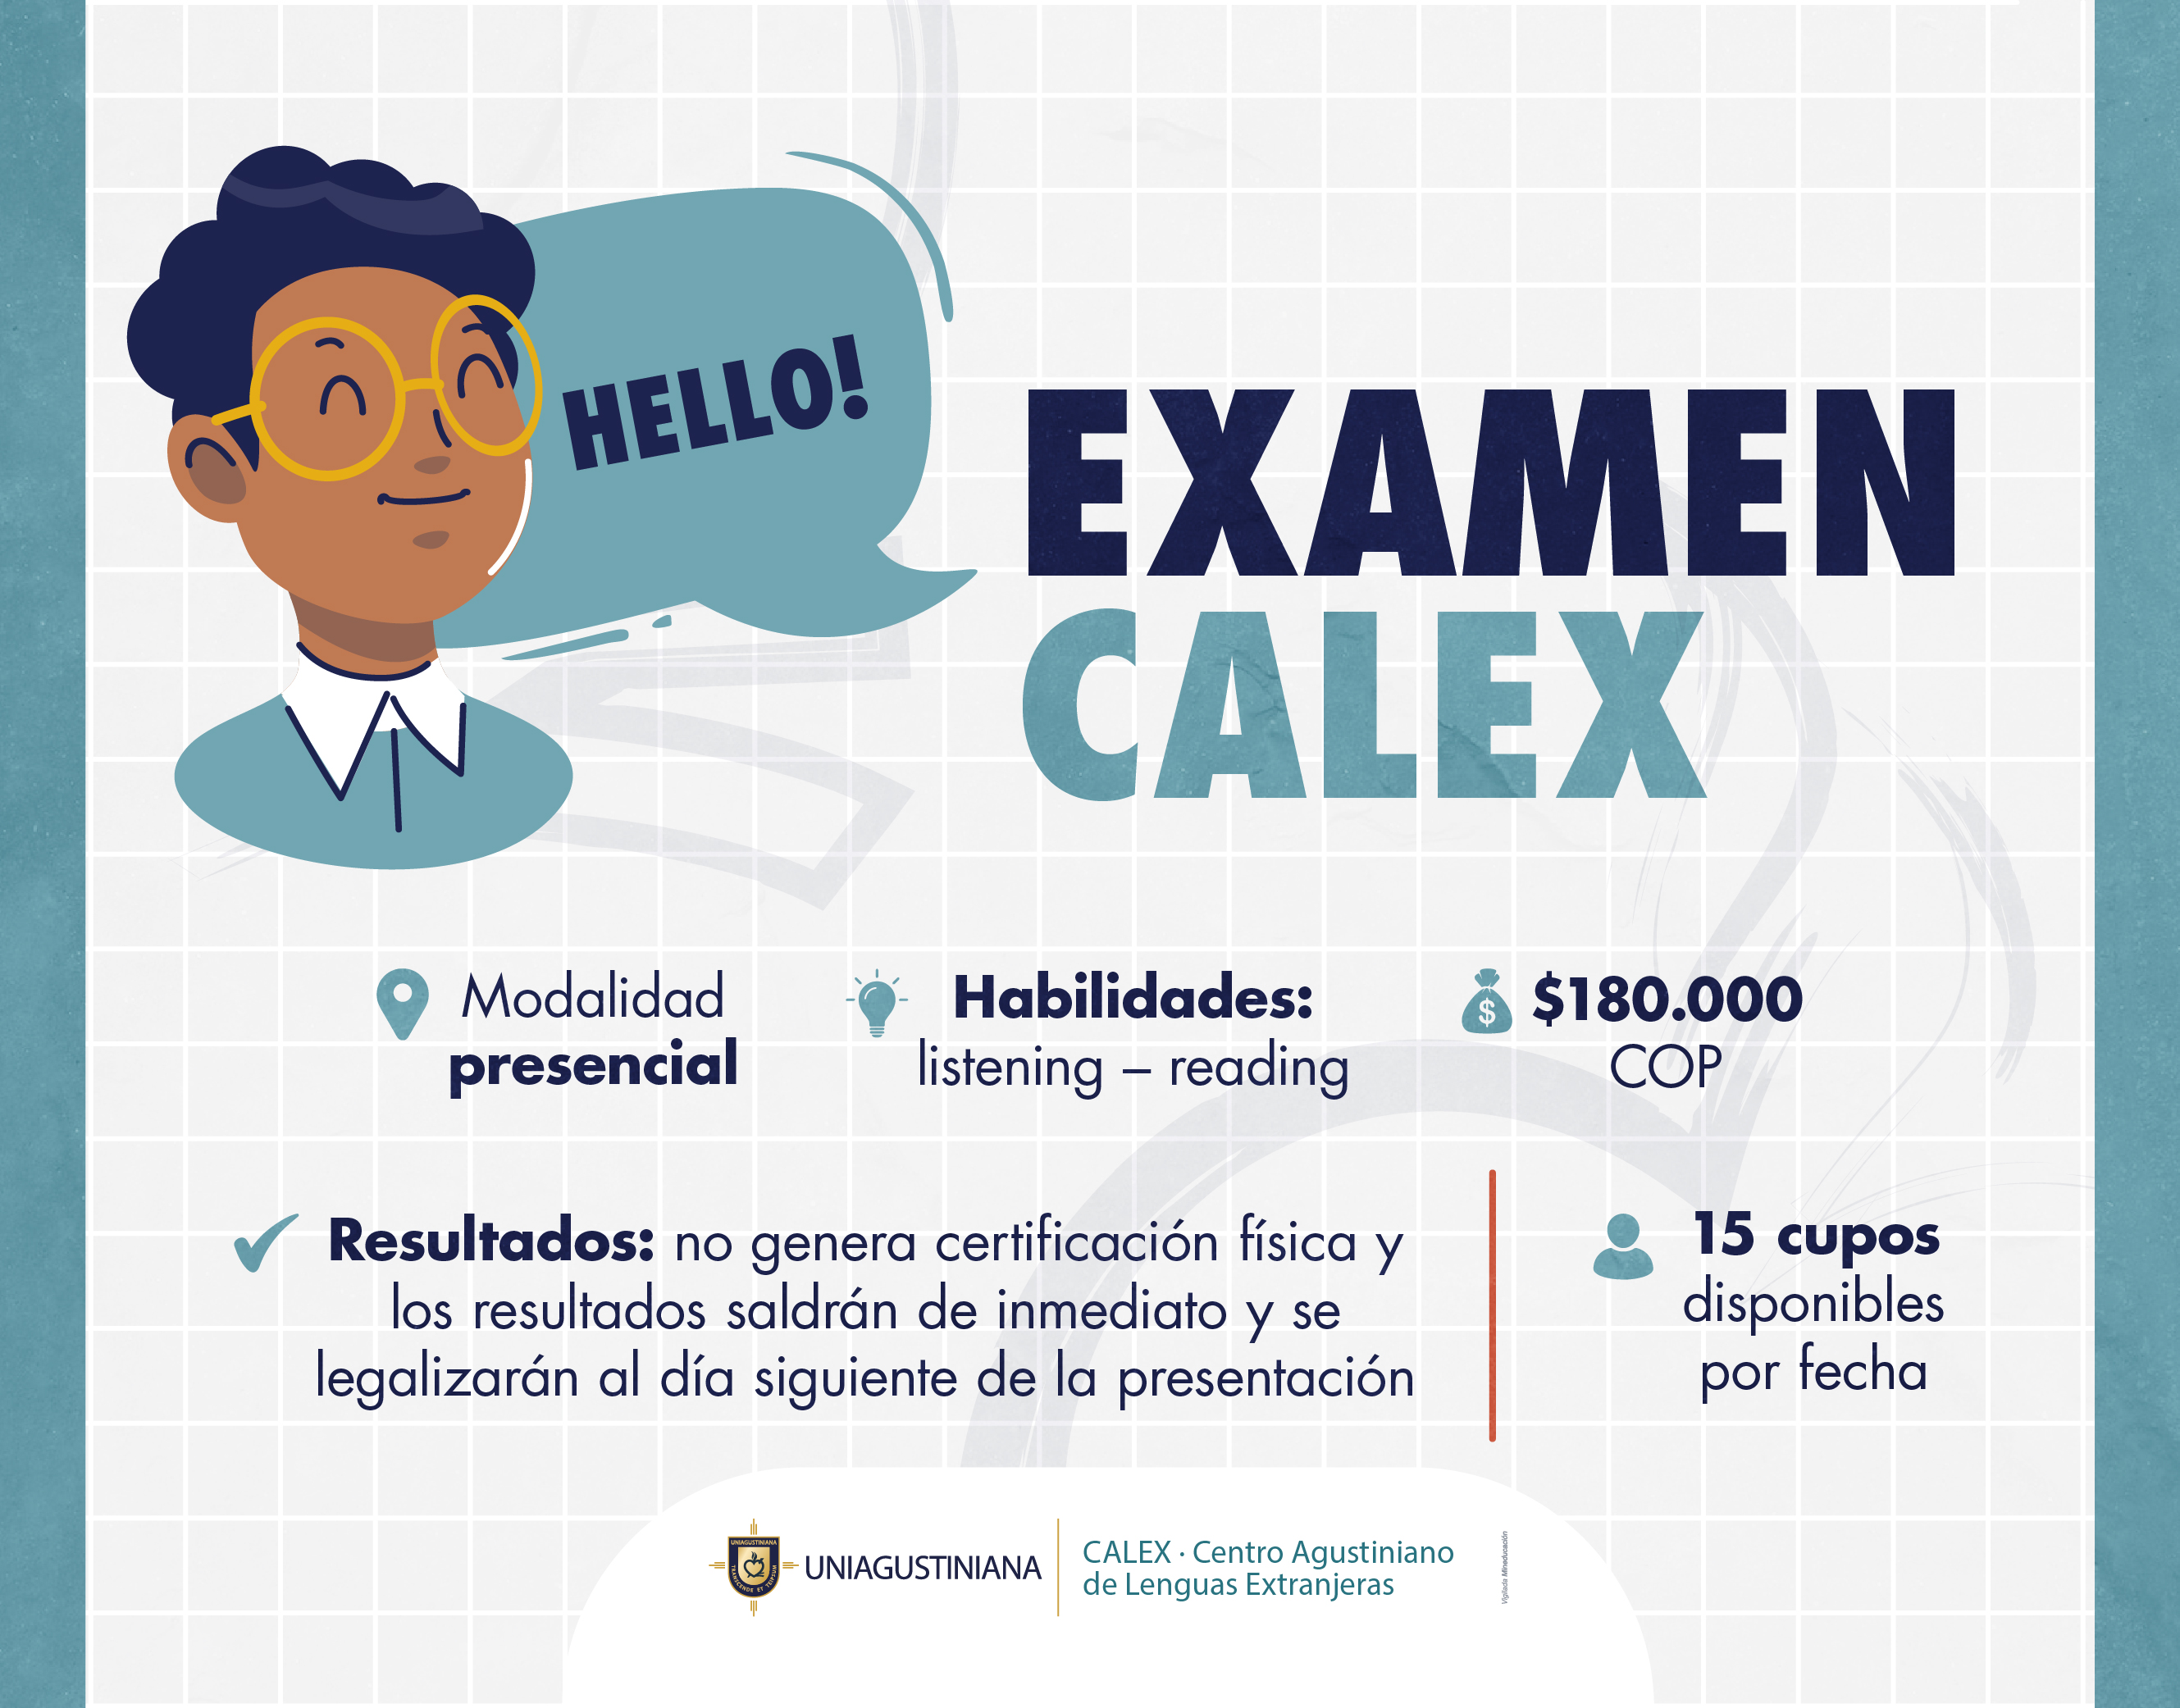 Examen CALEX